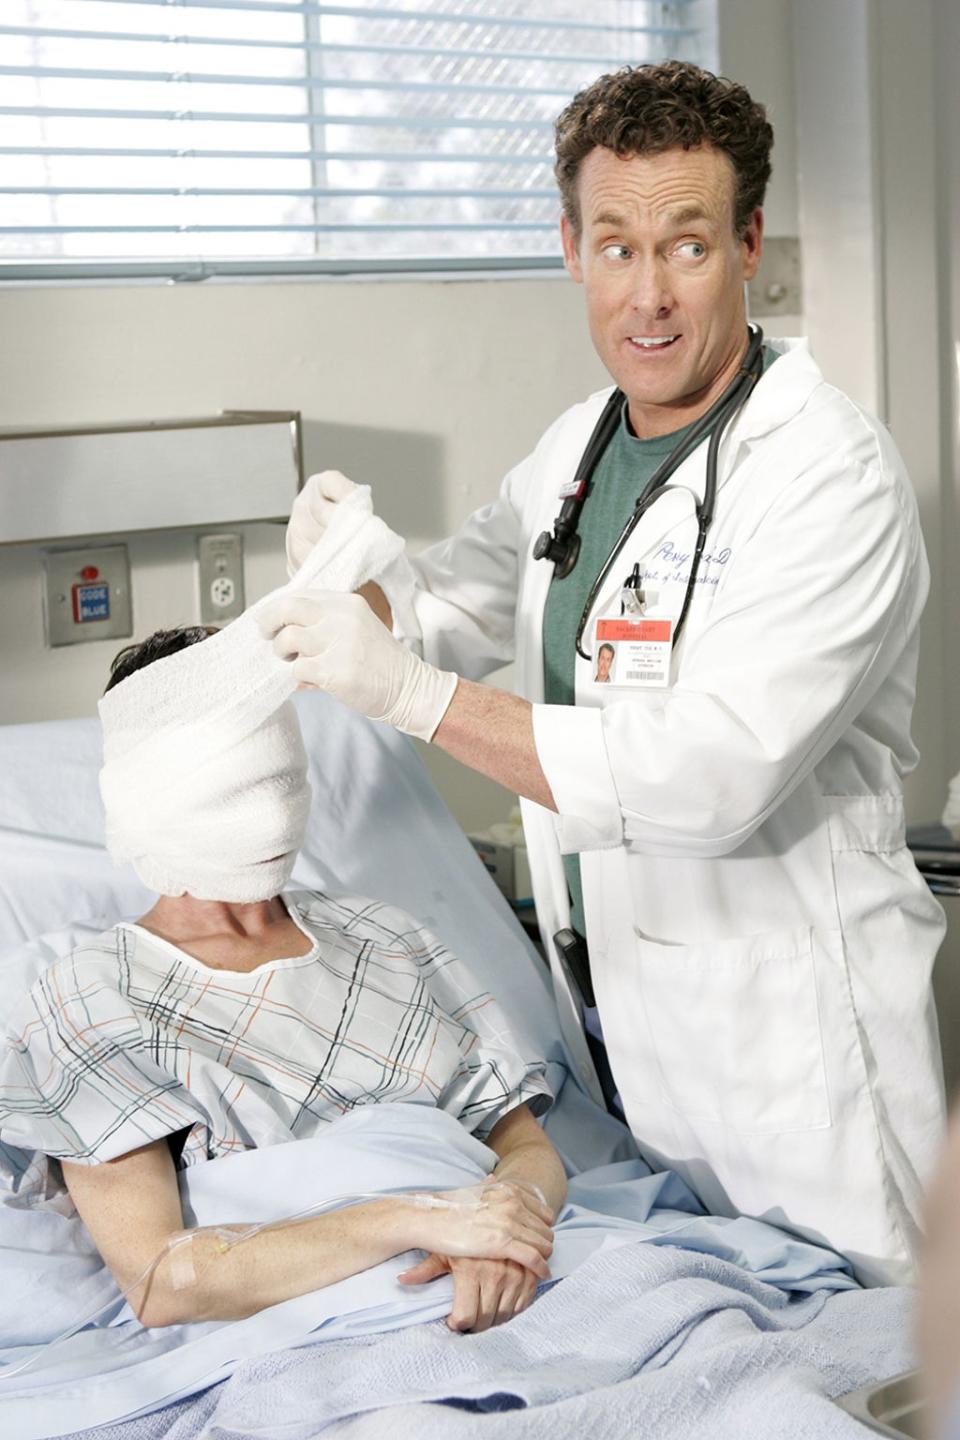 ‘I don’t suffer fools’: John C McGinley in ‘Scrubs' (NBC-TV/Kobal/Shutterstock)